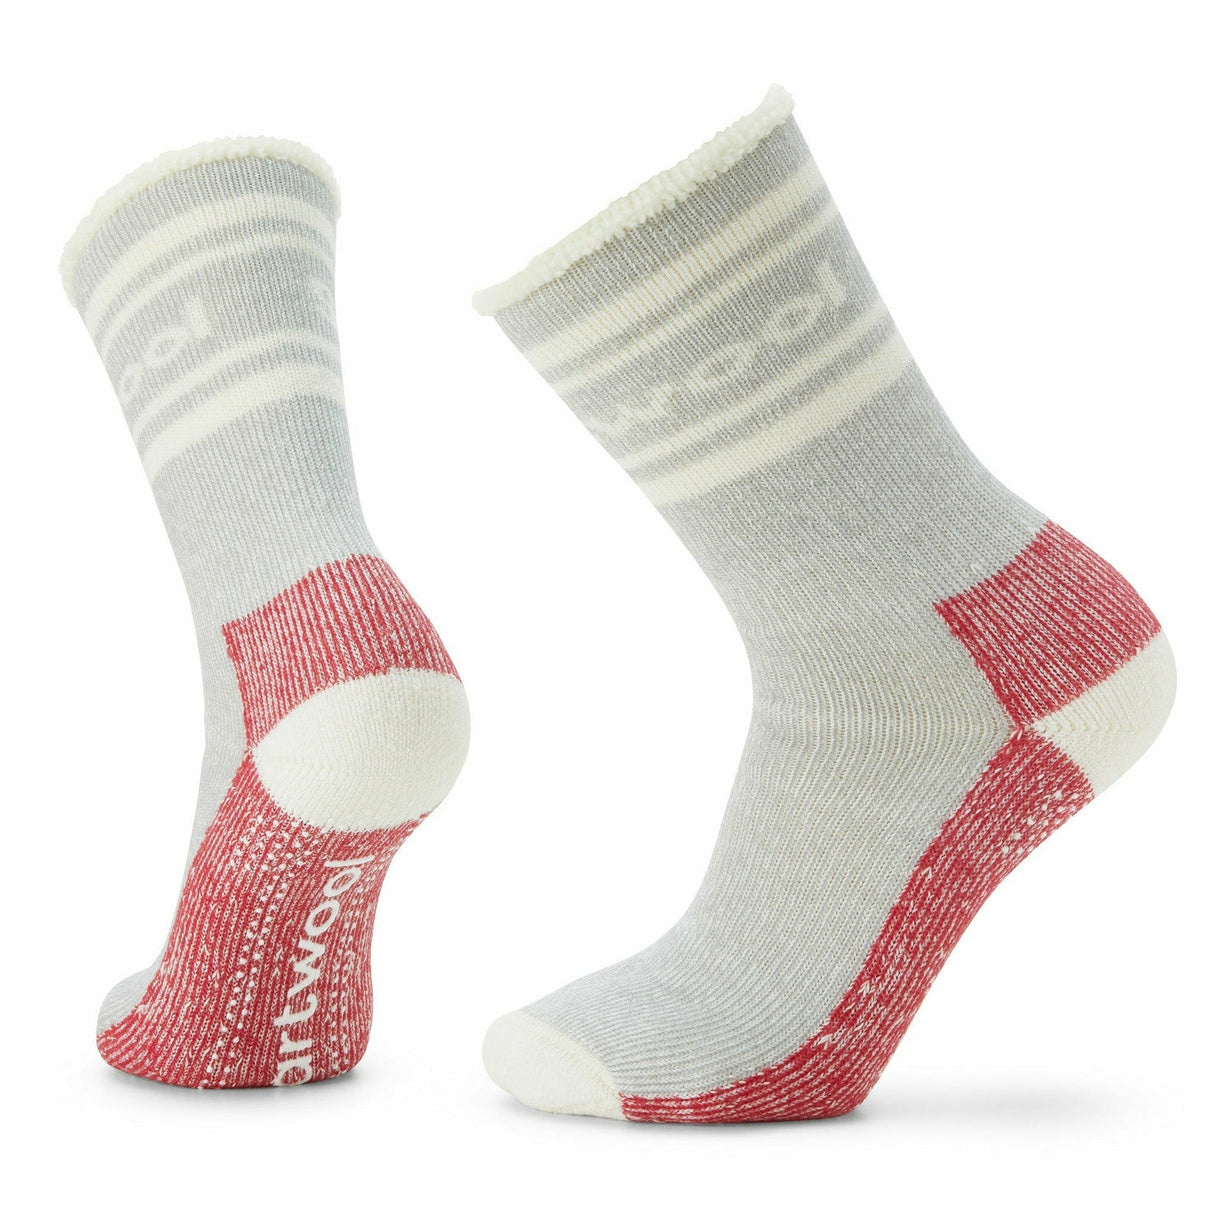 Smartwool Everyday Slipper Sock Crew Socks  -  Small / Medium Gray